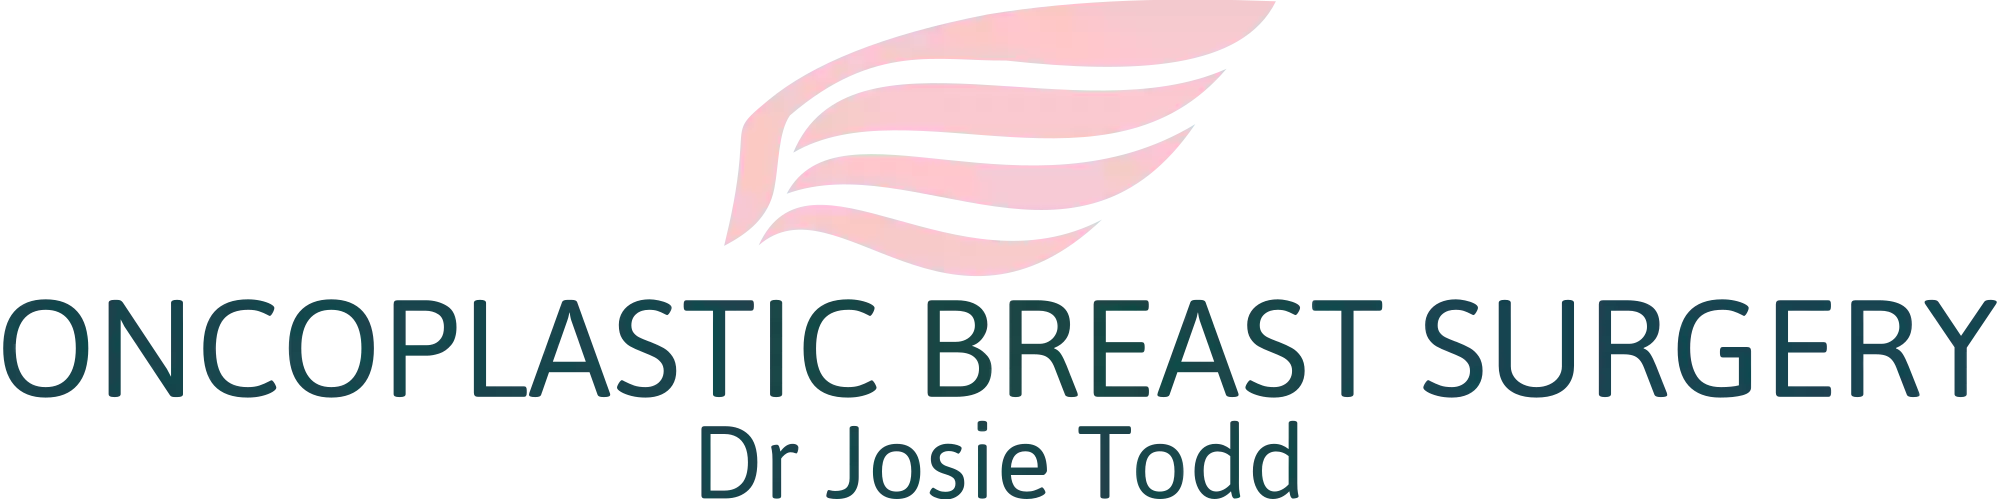 Oncoplastic Breast Surgery - Dr Josie Todd